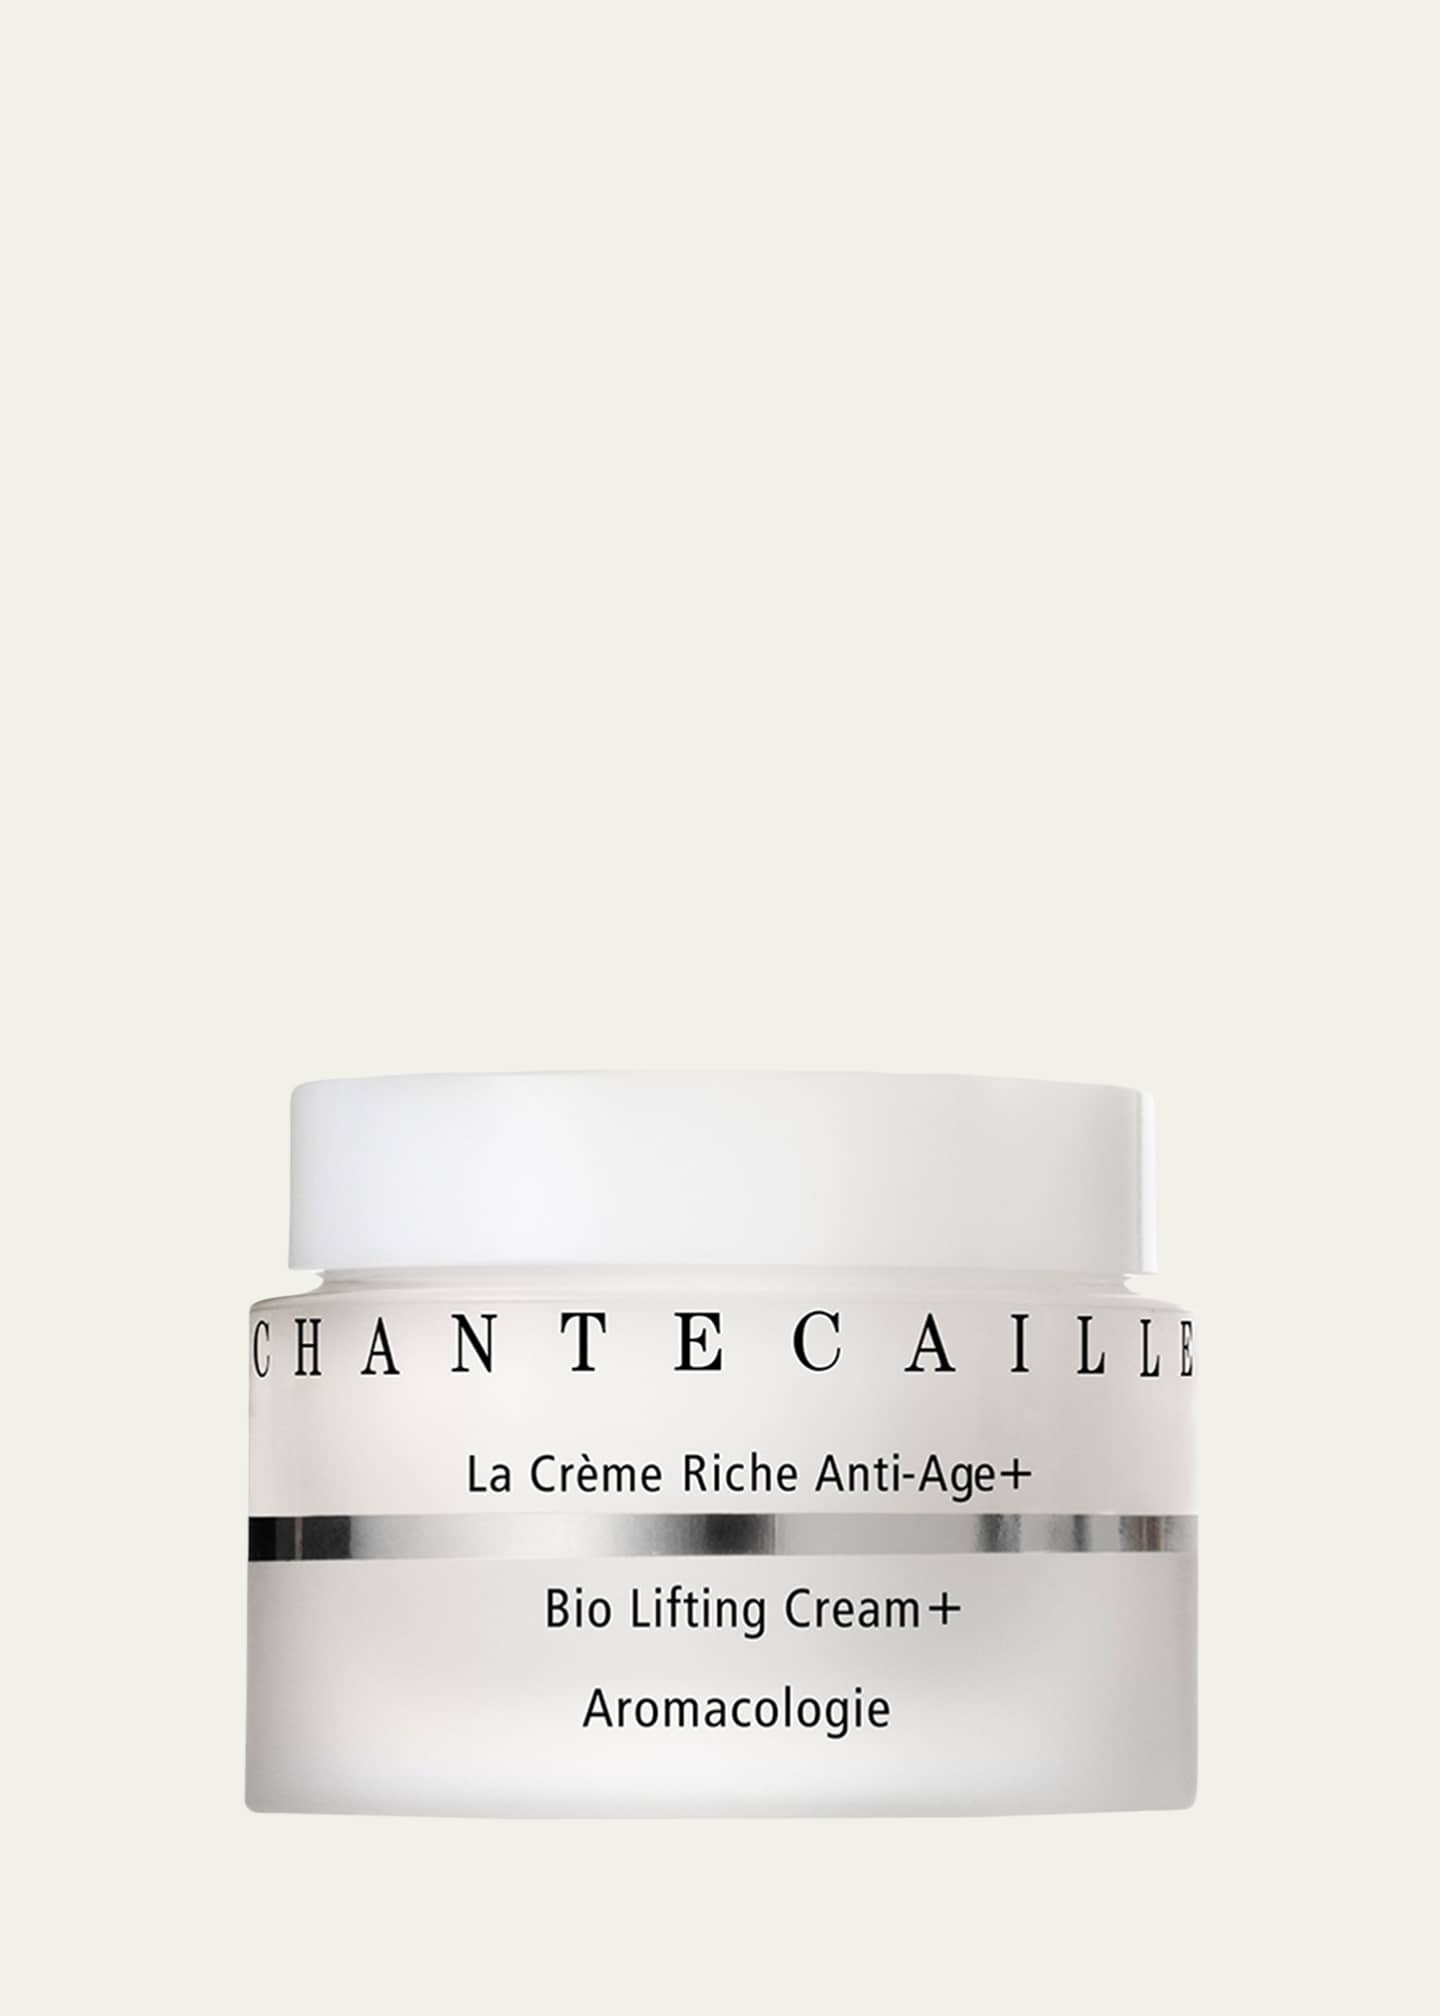 Chantecaille Bio Lifting Cream +, 1.7 oz. Image 1 of 2